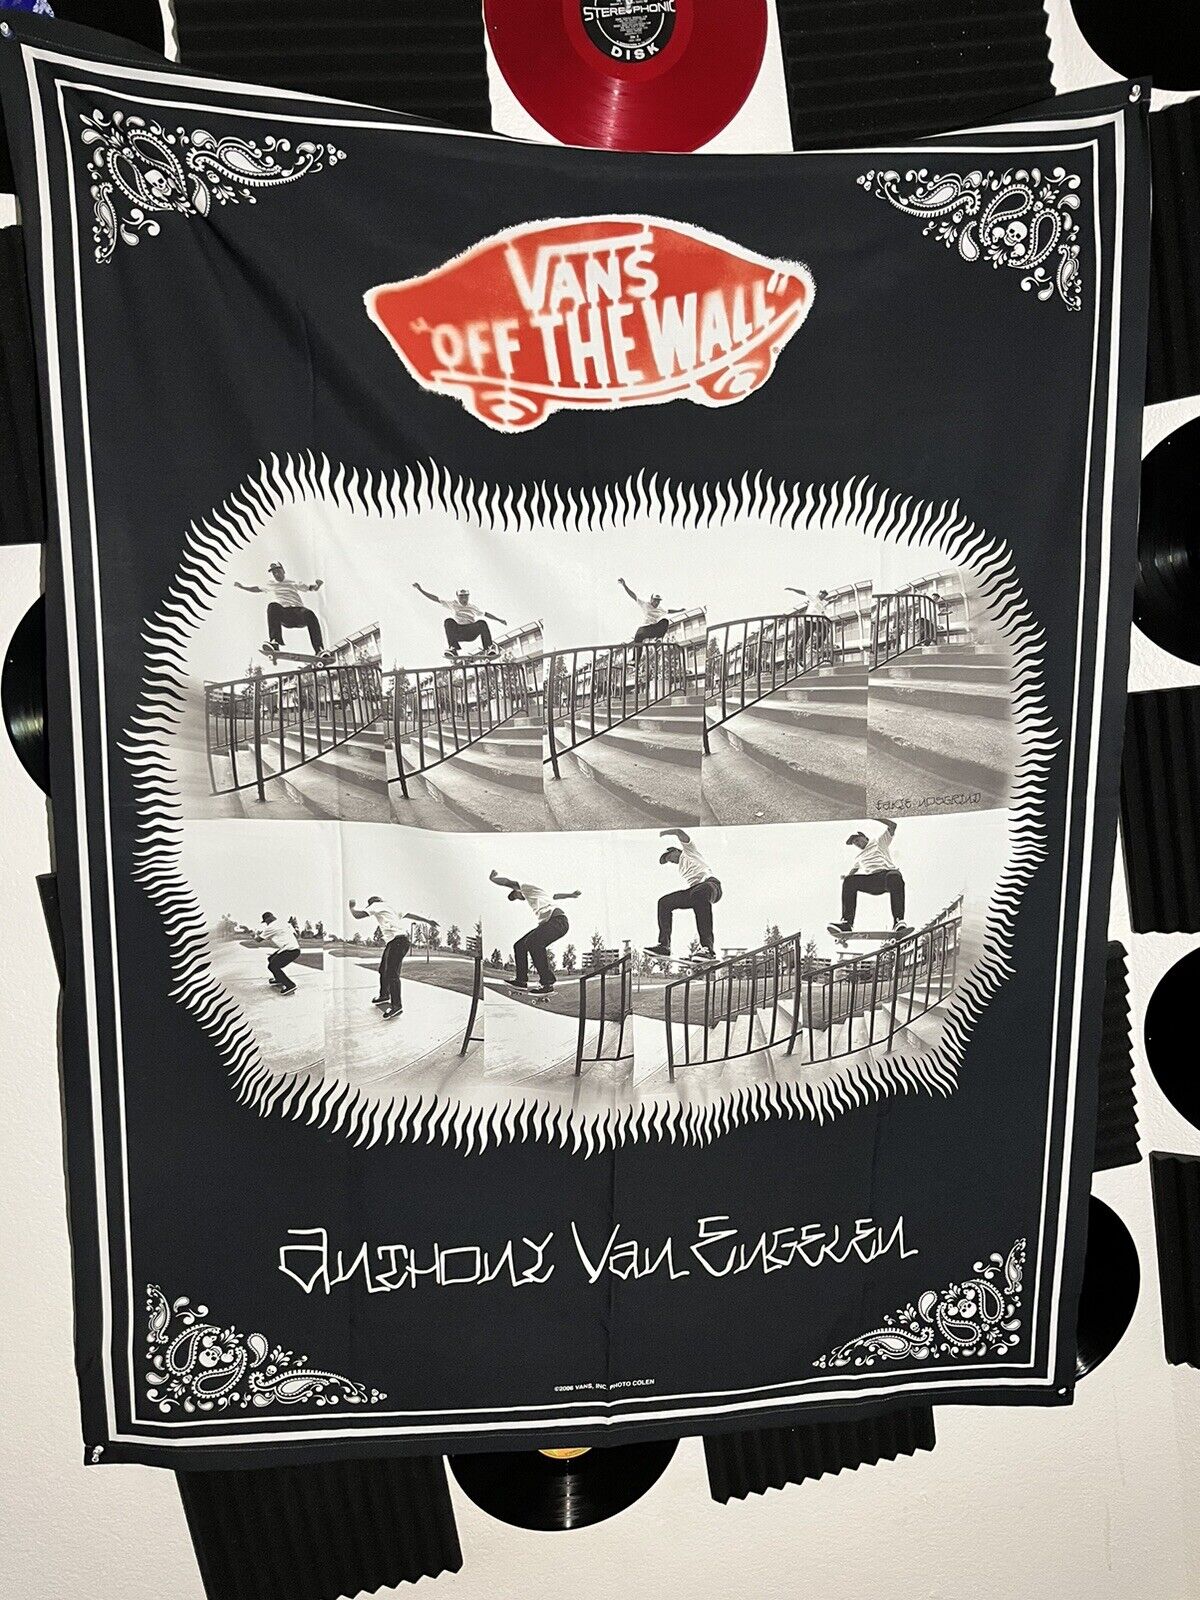 Vans ‘Off The Wall’ Poster Anthony Van Engelen Store Wall Banner Super Rare